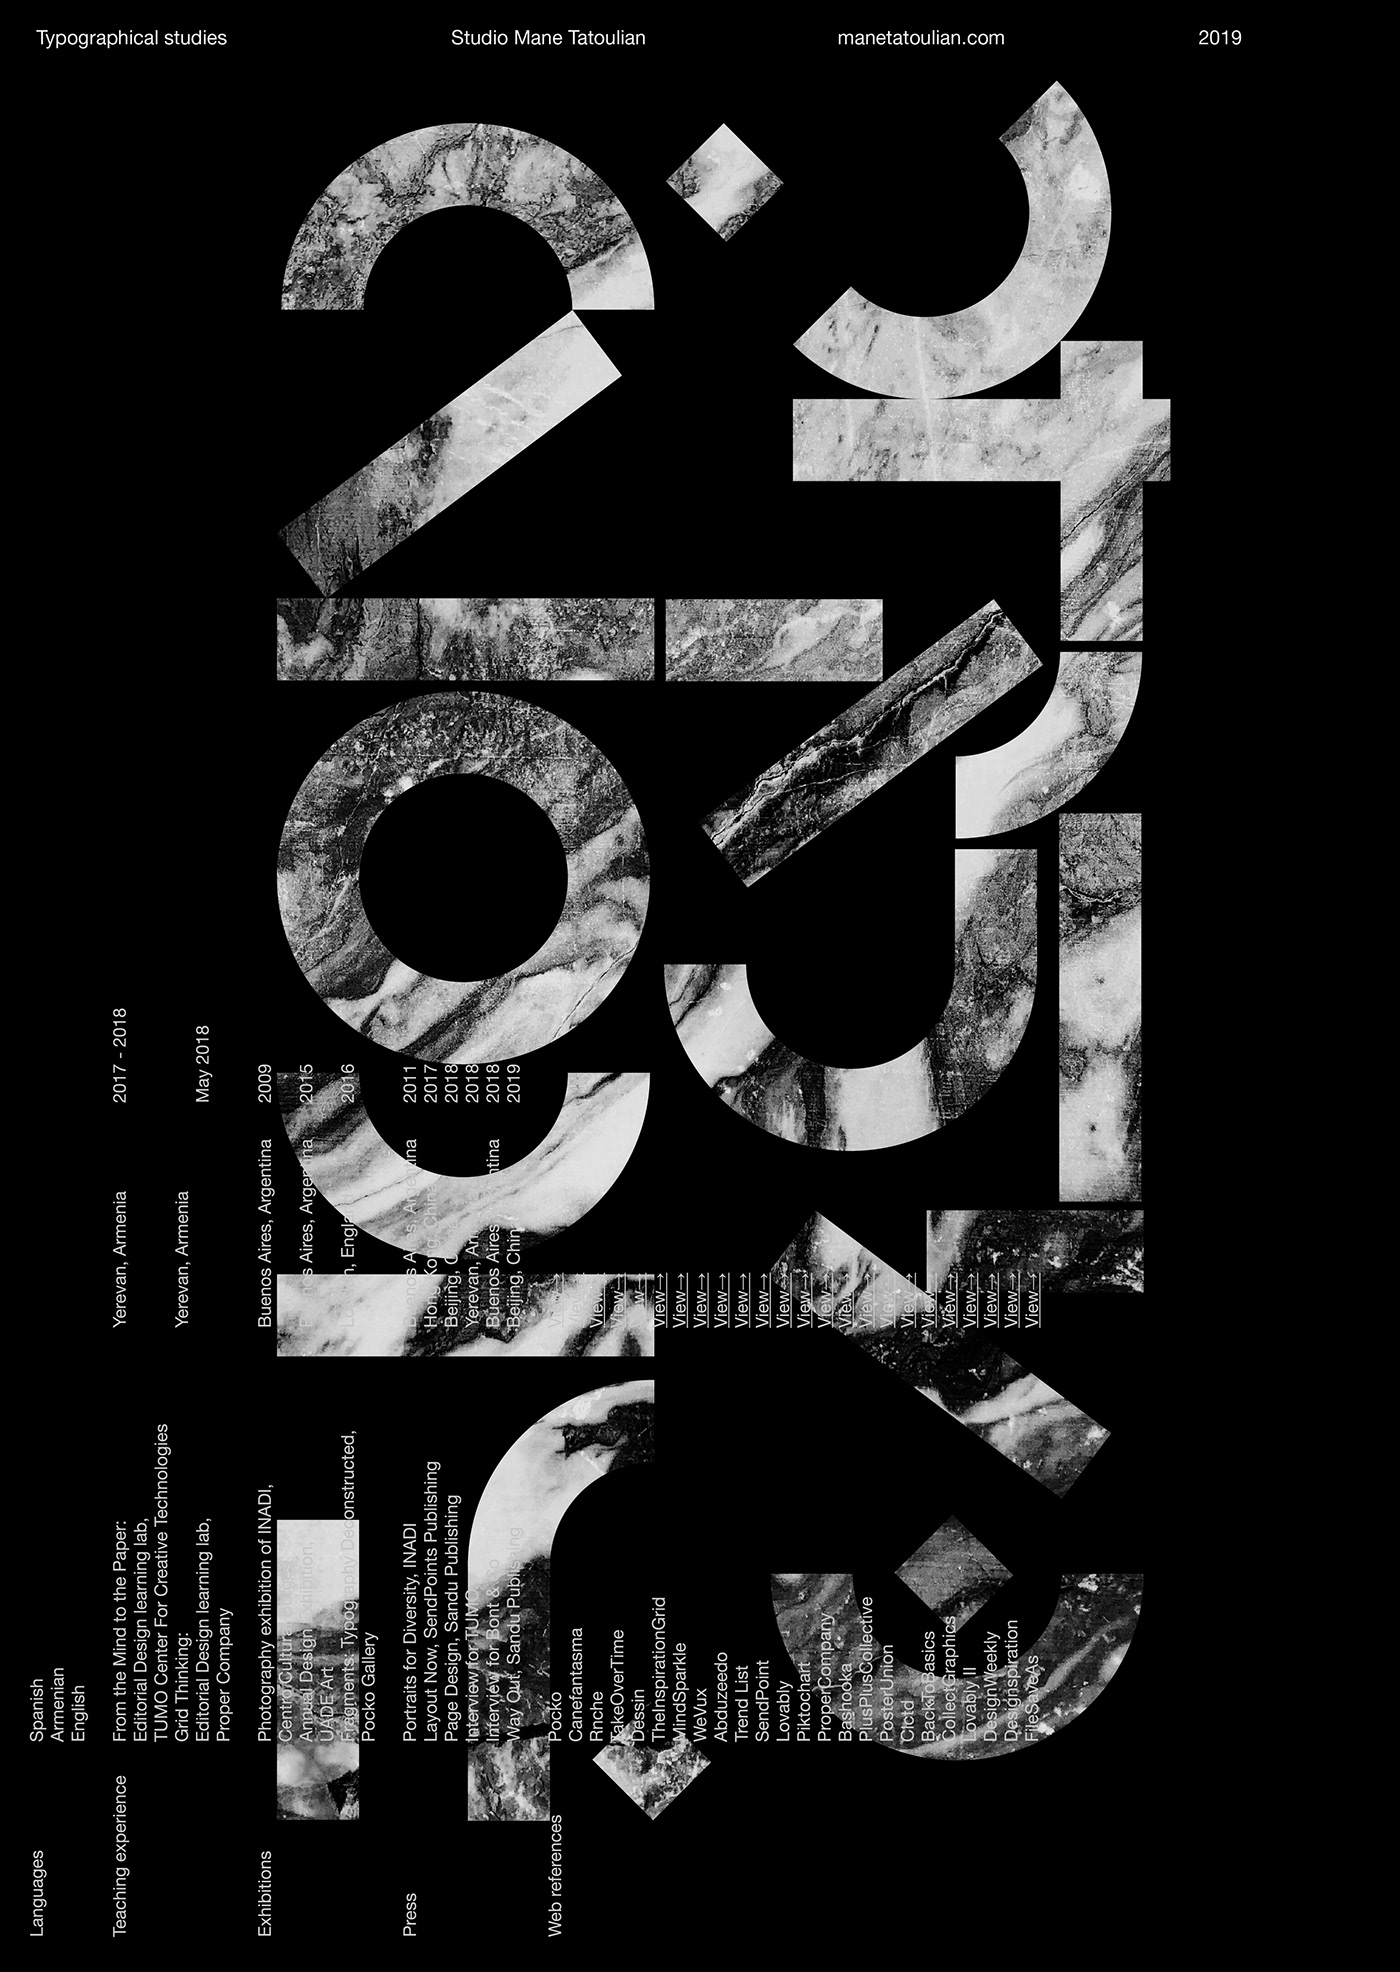 Typeface typography   tipografia helvetica Brutalism poster art mane tatoulian FUTURISM digital